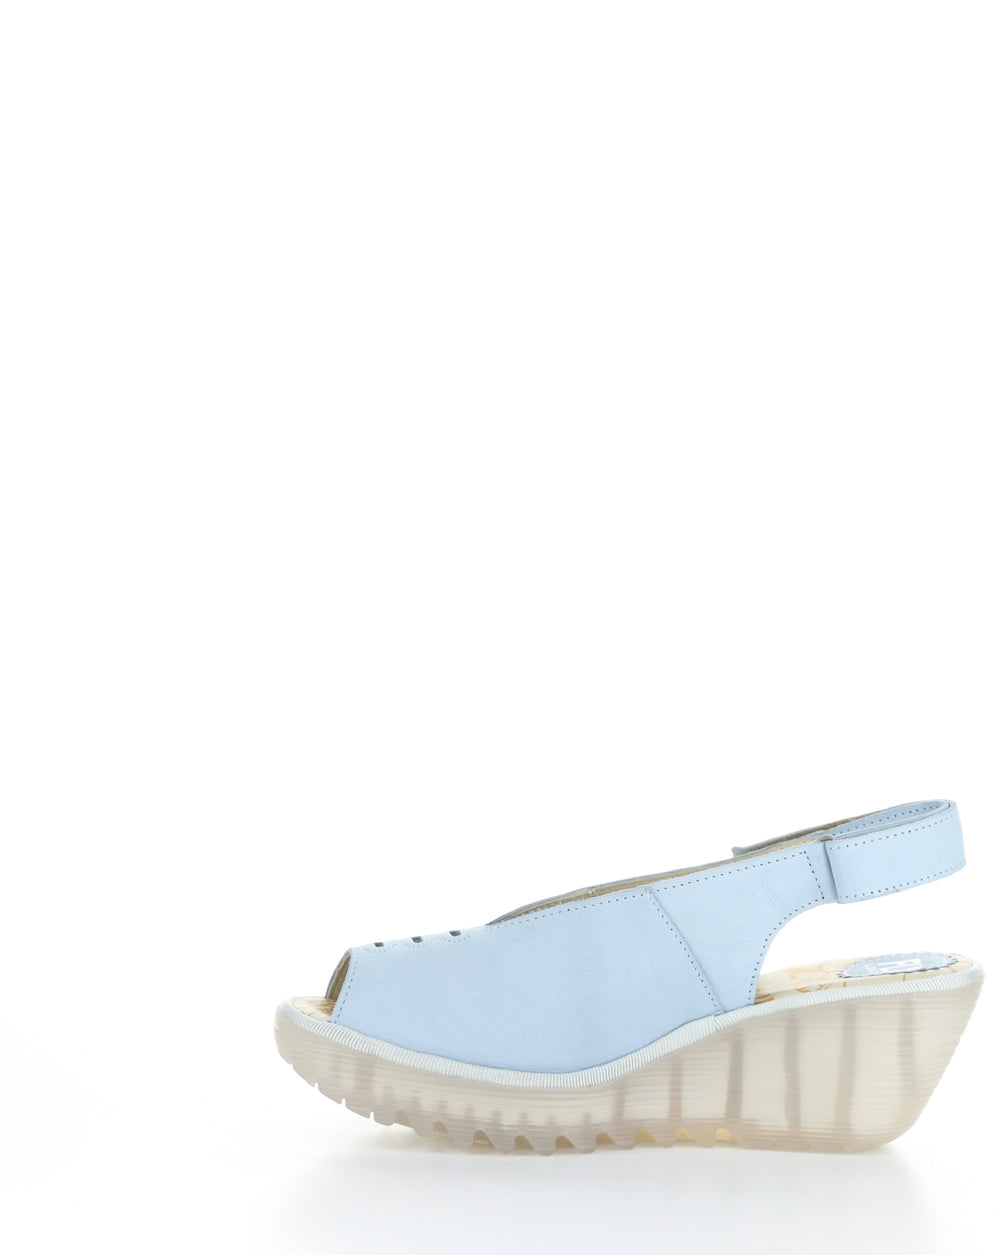 YEAY387FLY 010 SKY BLUE Velcro Sandals